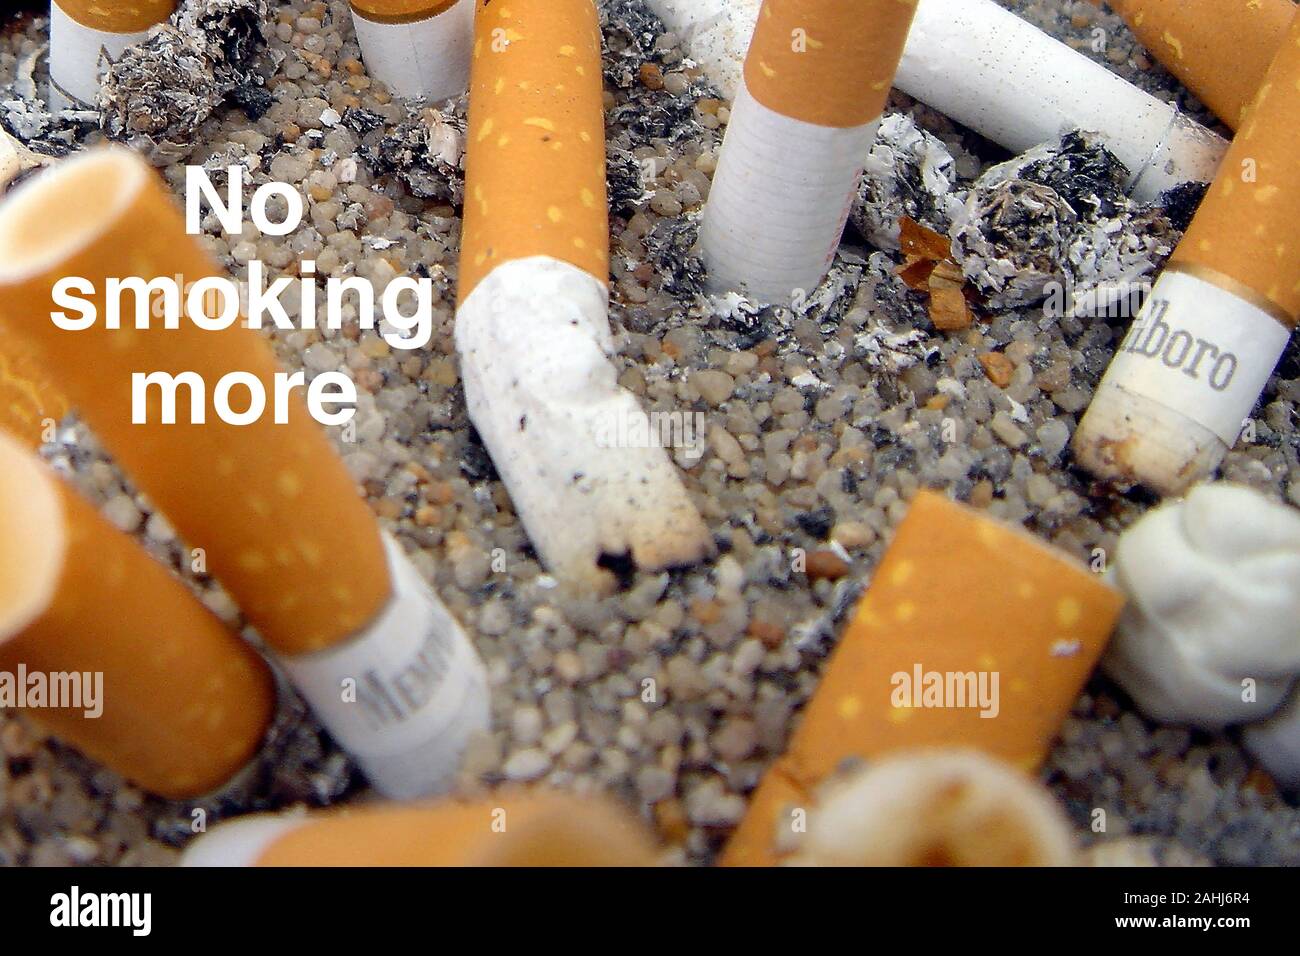 Zigarettenstummel, Aschenbecher, Zigaretten, Raucher, Asche, Vorsätze für 2020, mit dem Rauchen aufhören, Foto de stock